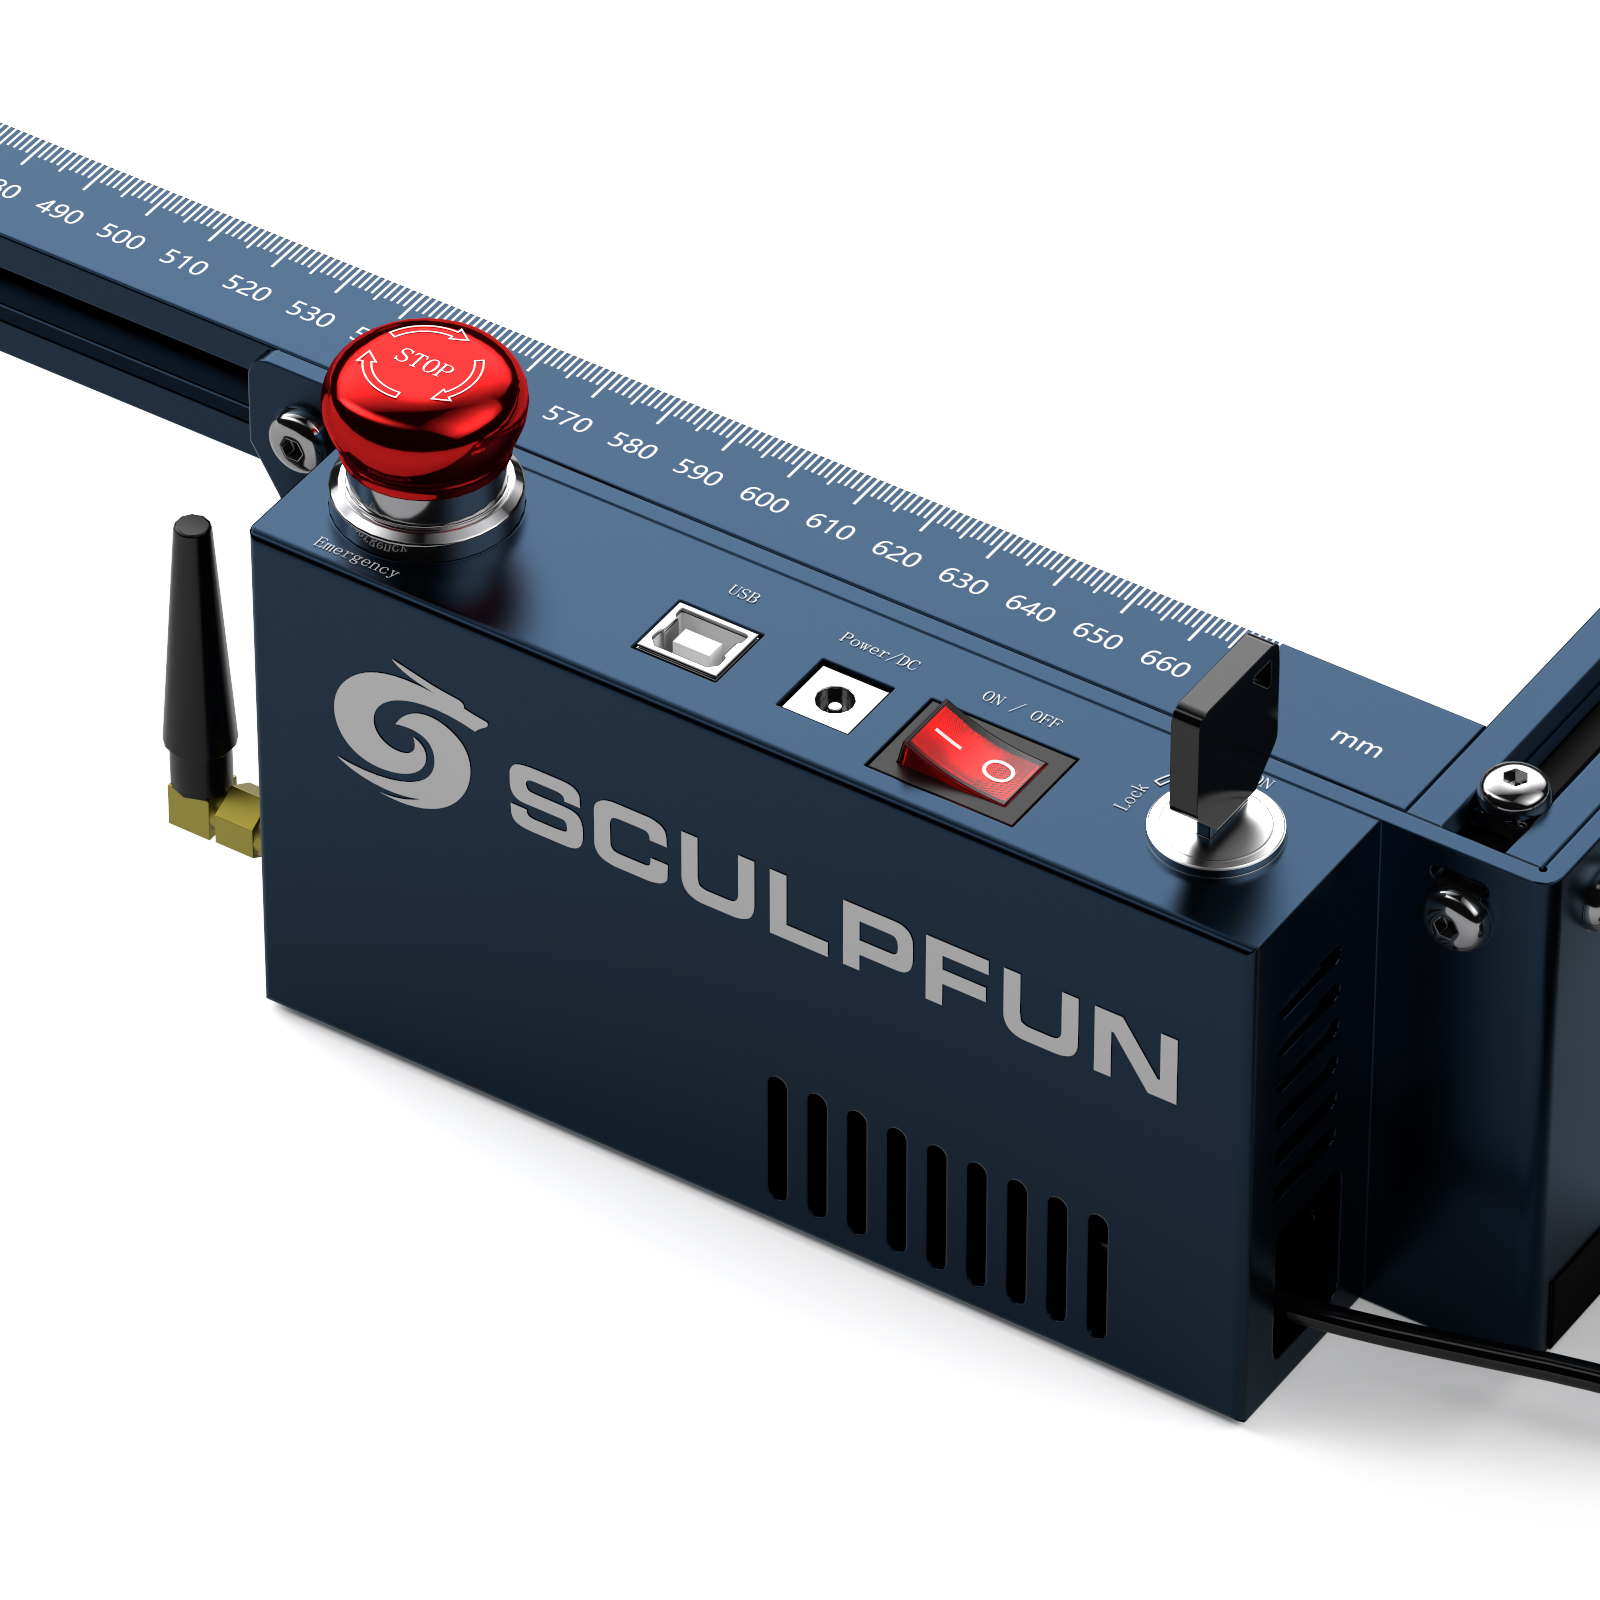 Sculpfun Motherboard | 32bit for S9/S10 /S30 series | Laser Engraving